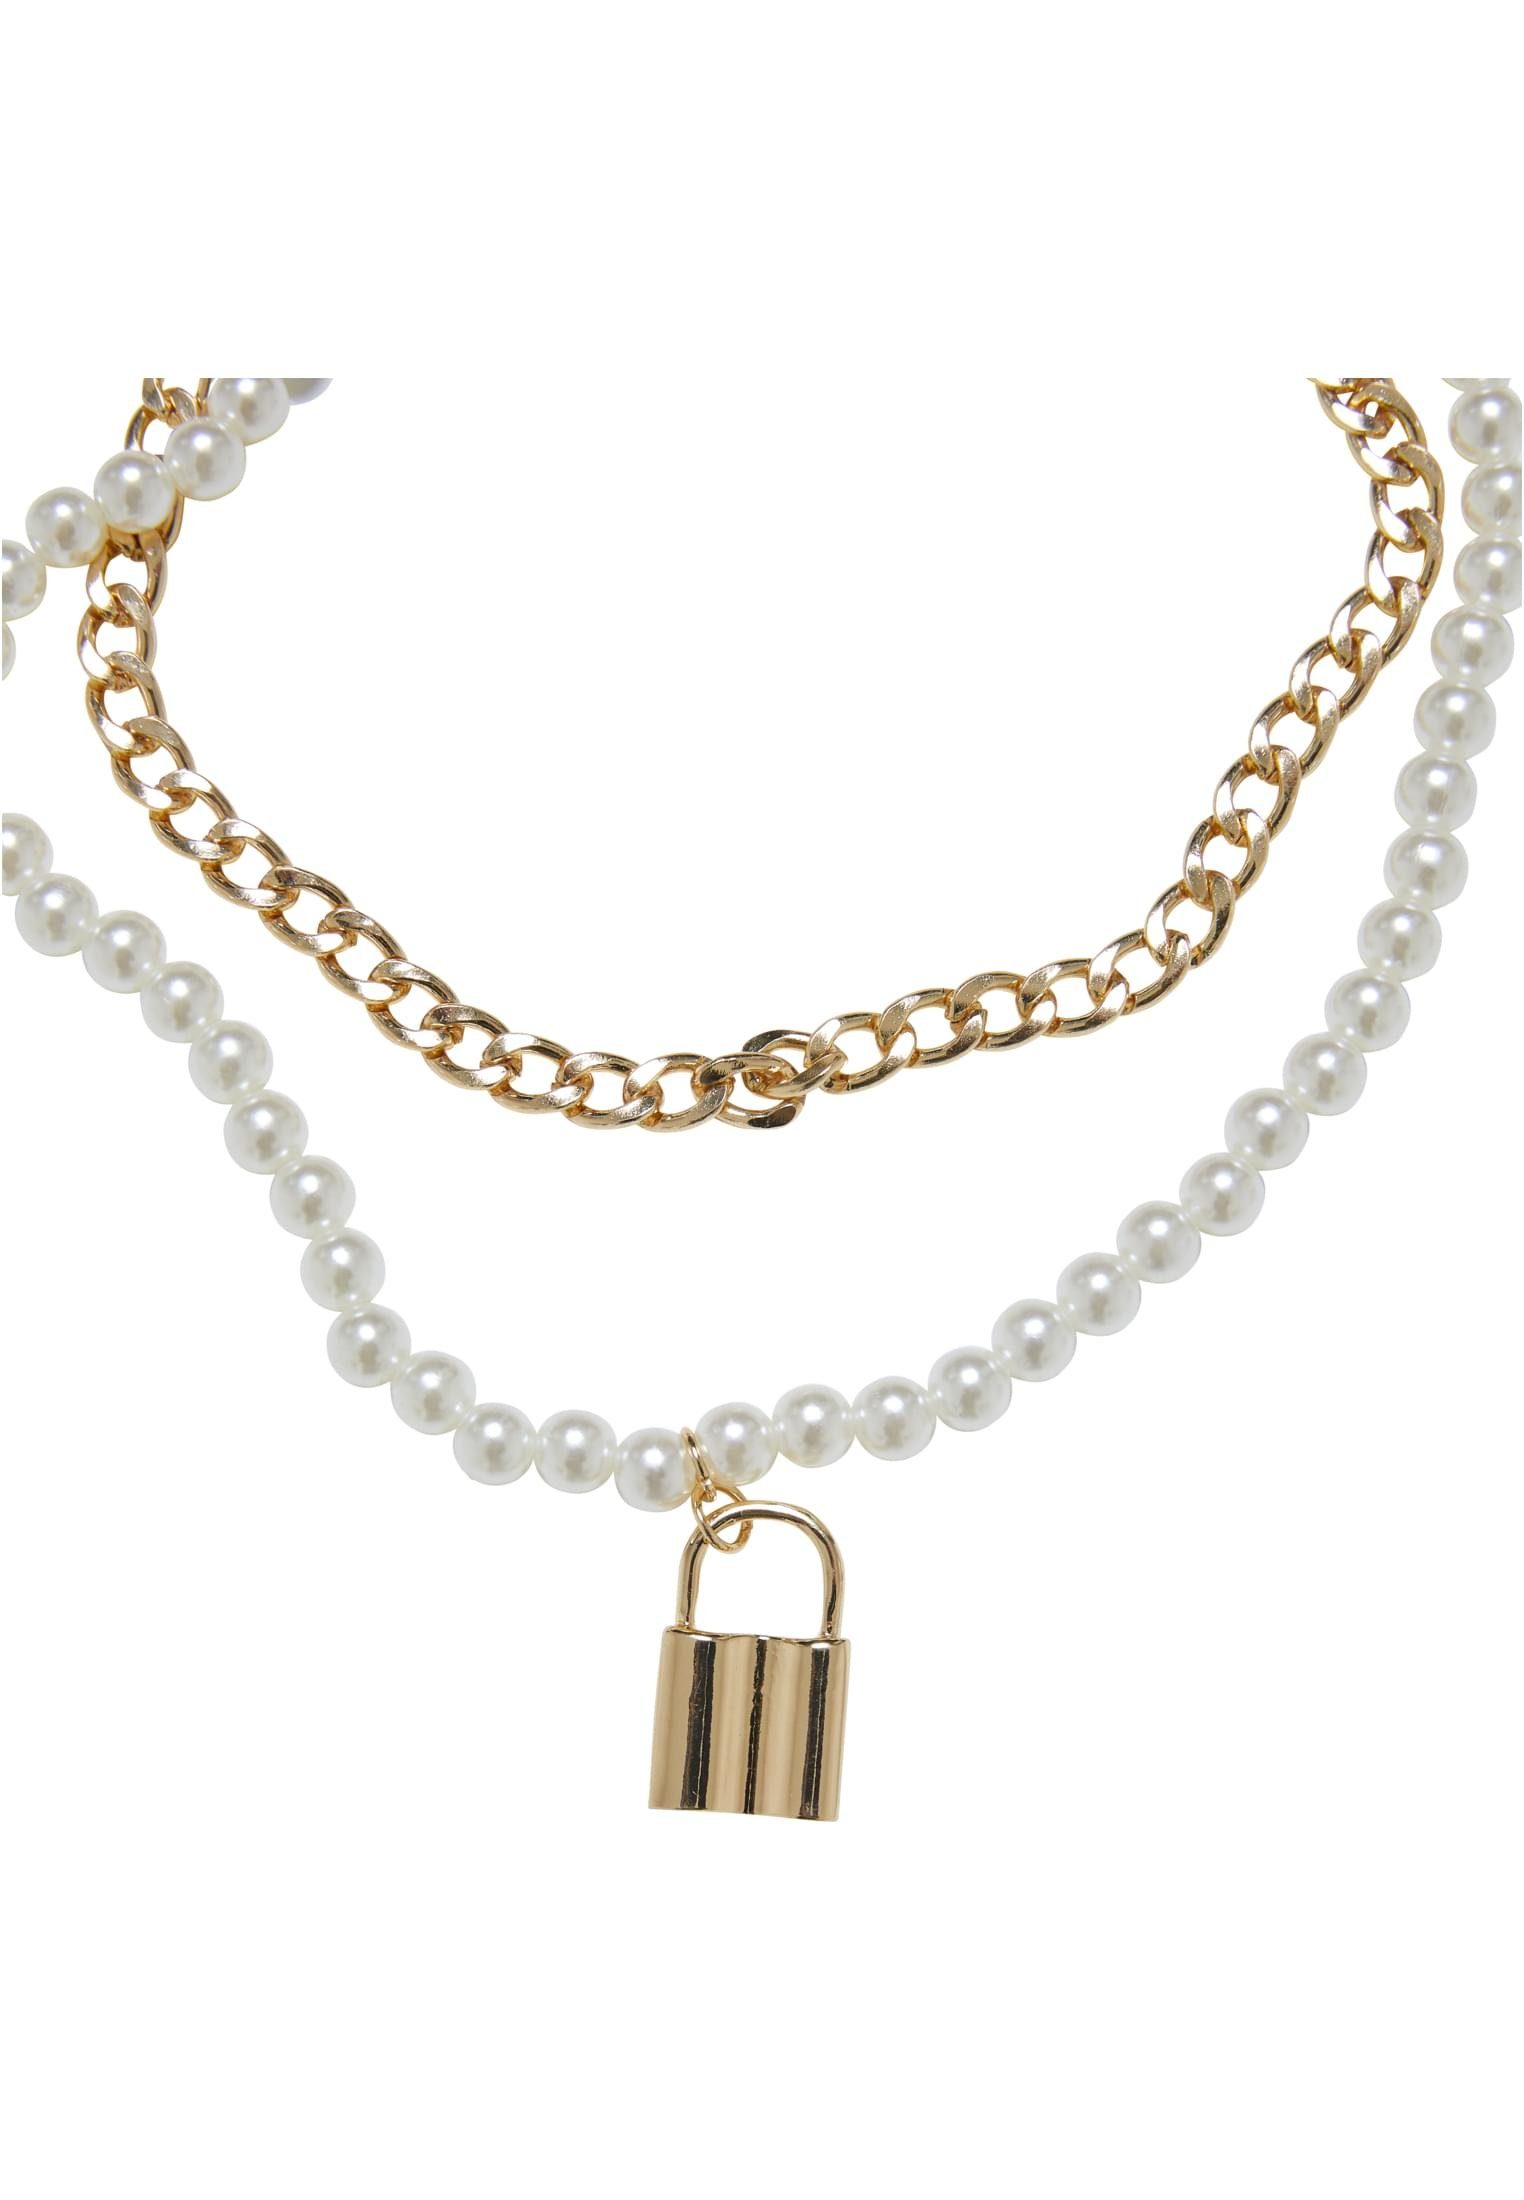 URBAN Padlock Pearl CLASSICS Necklace Layering Accessoires Edelstahlkette